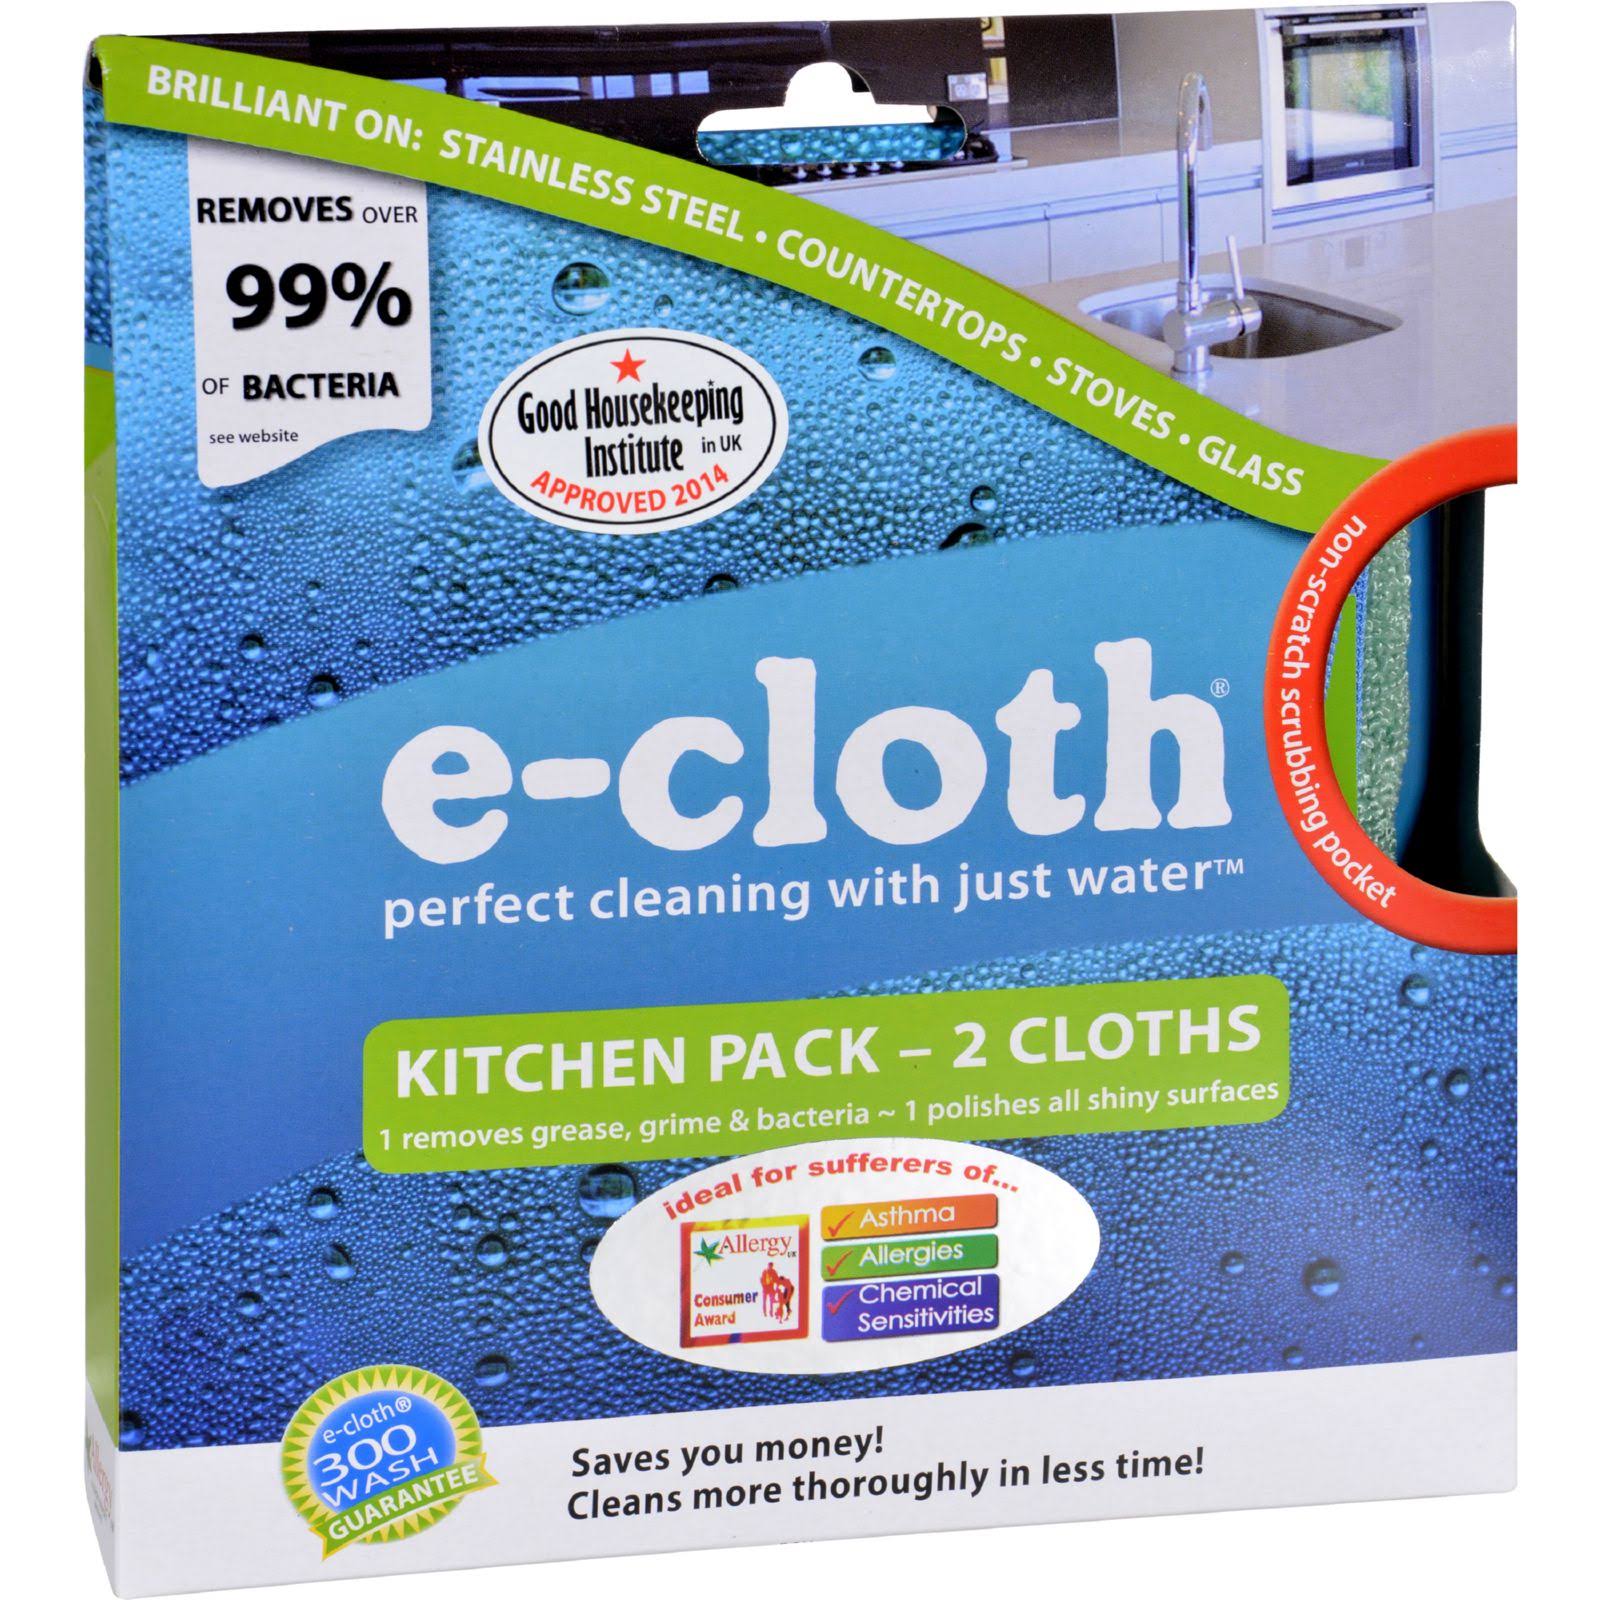 E-cloth Kitchen Pack - 2 Cloths